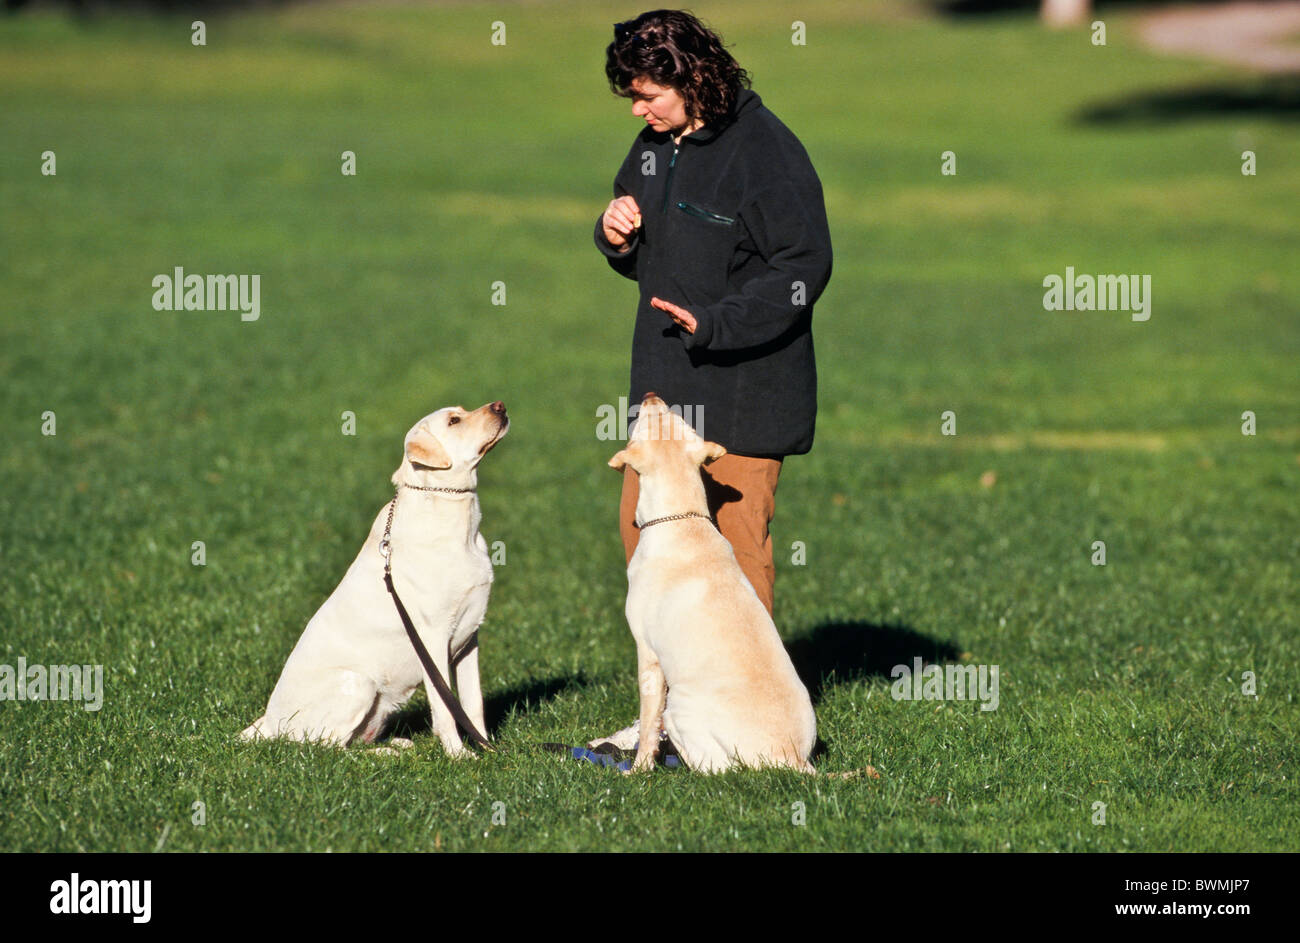 Owner training labrador dogs, Australia Stock Photo - Alamy